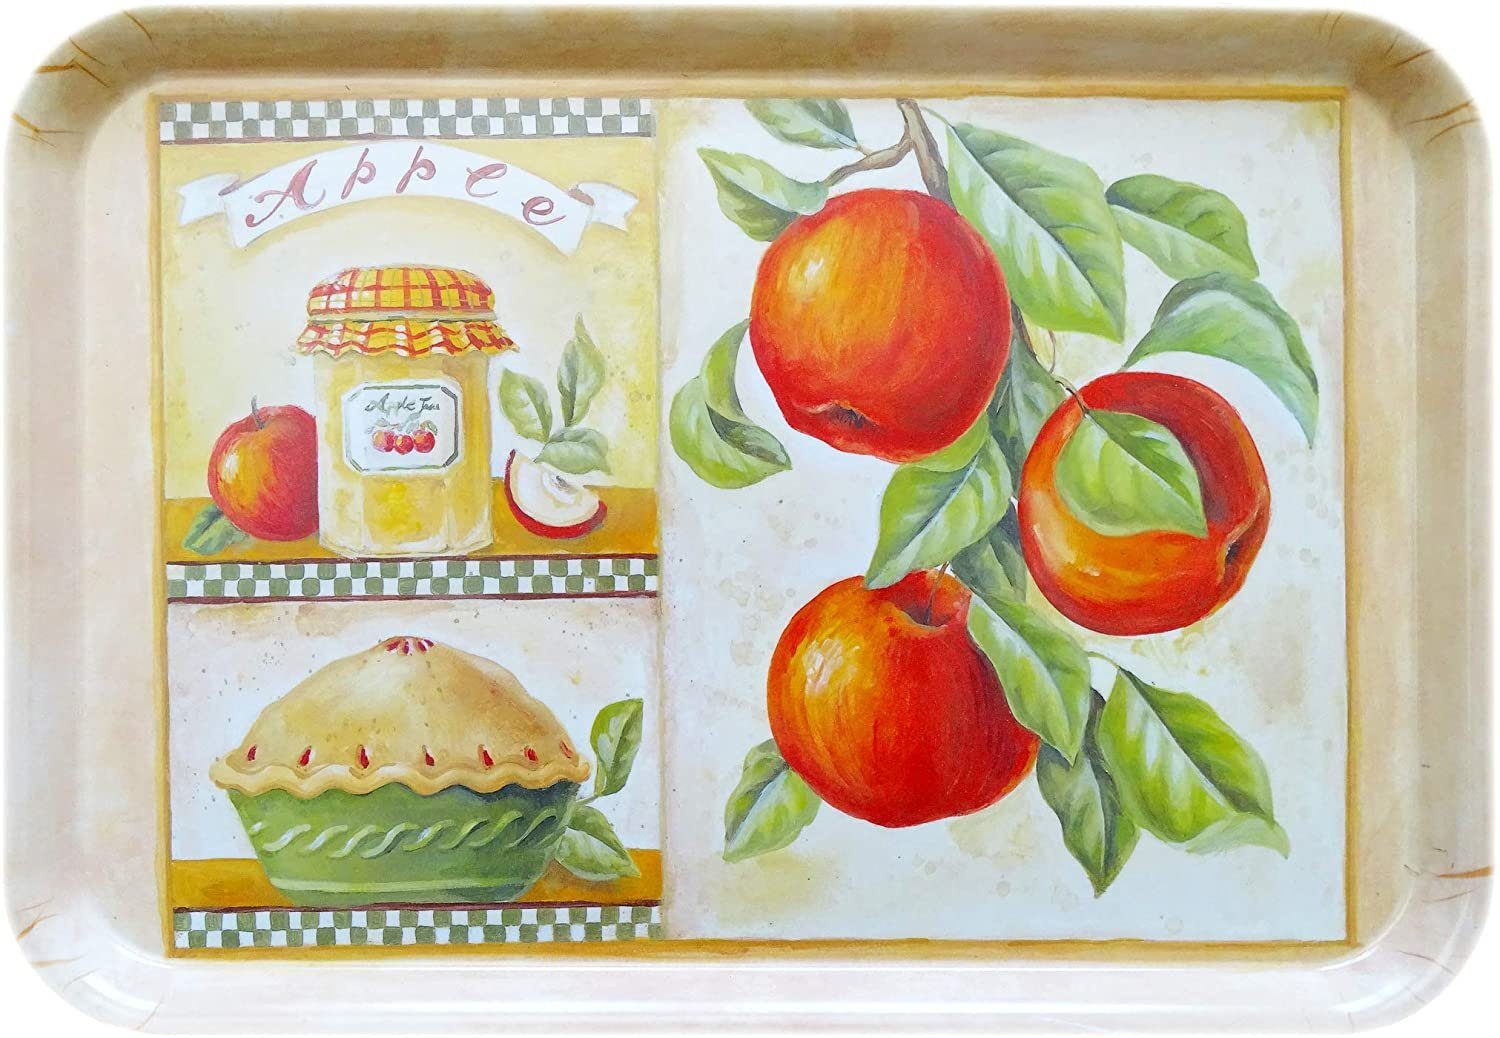 Lashuma Tablett Apfelkuchen, Kunststoff, (1-tlg), Italienisches Gartentablett rechteckig 38x26 cm beige